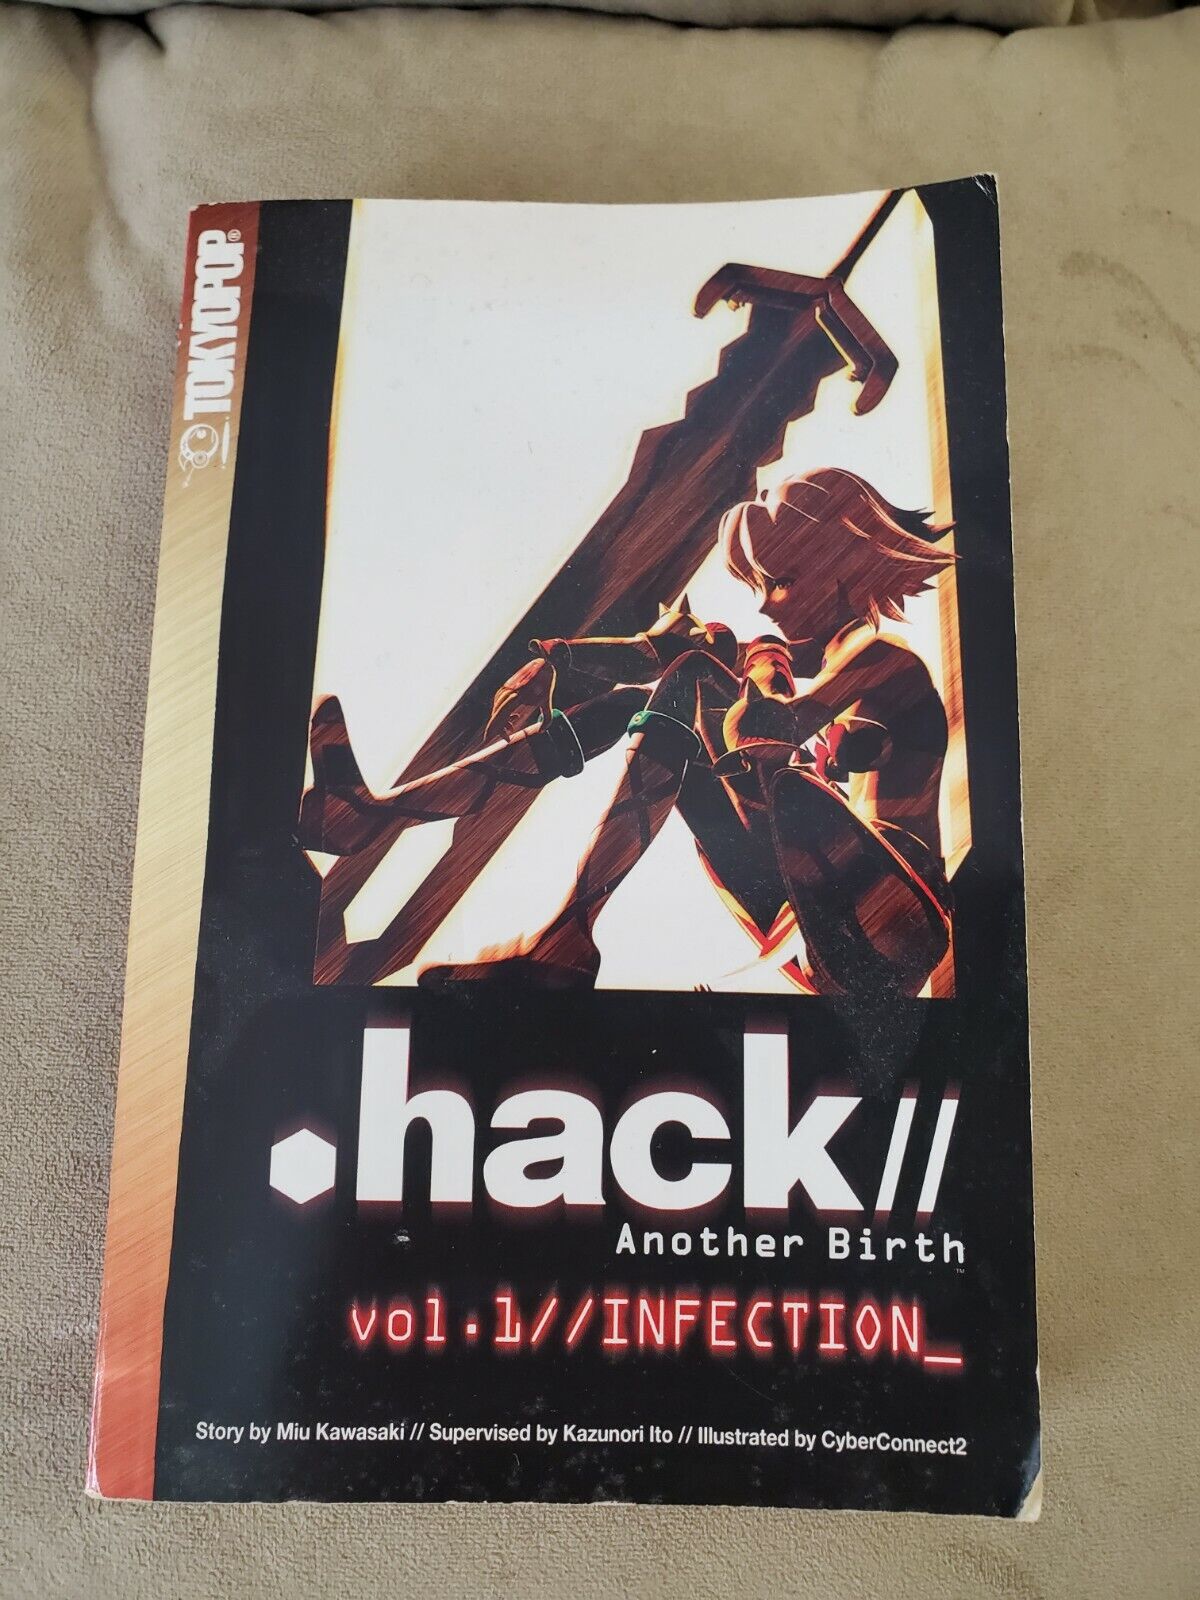 .hack Another Birth vol.1 Infection (manga, anime, light novel)